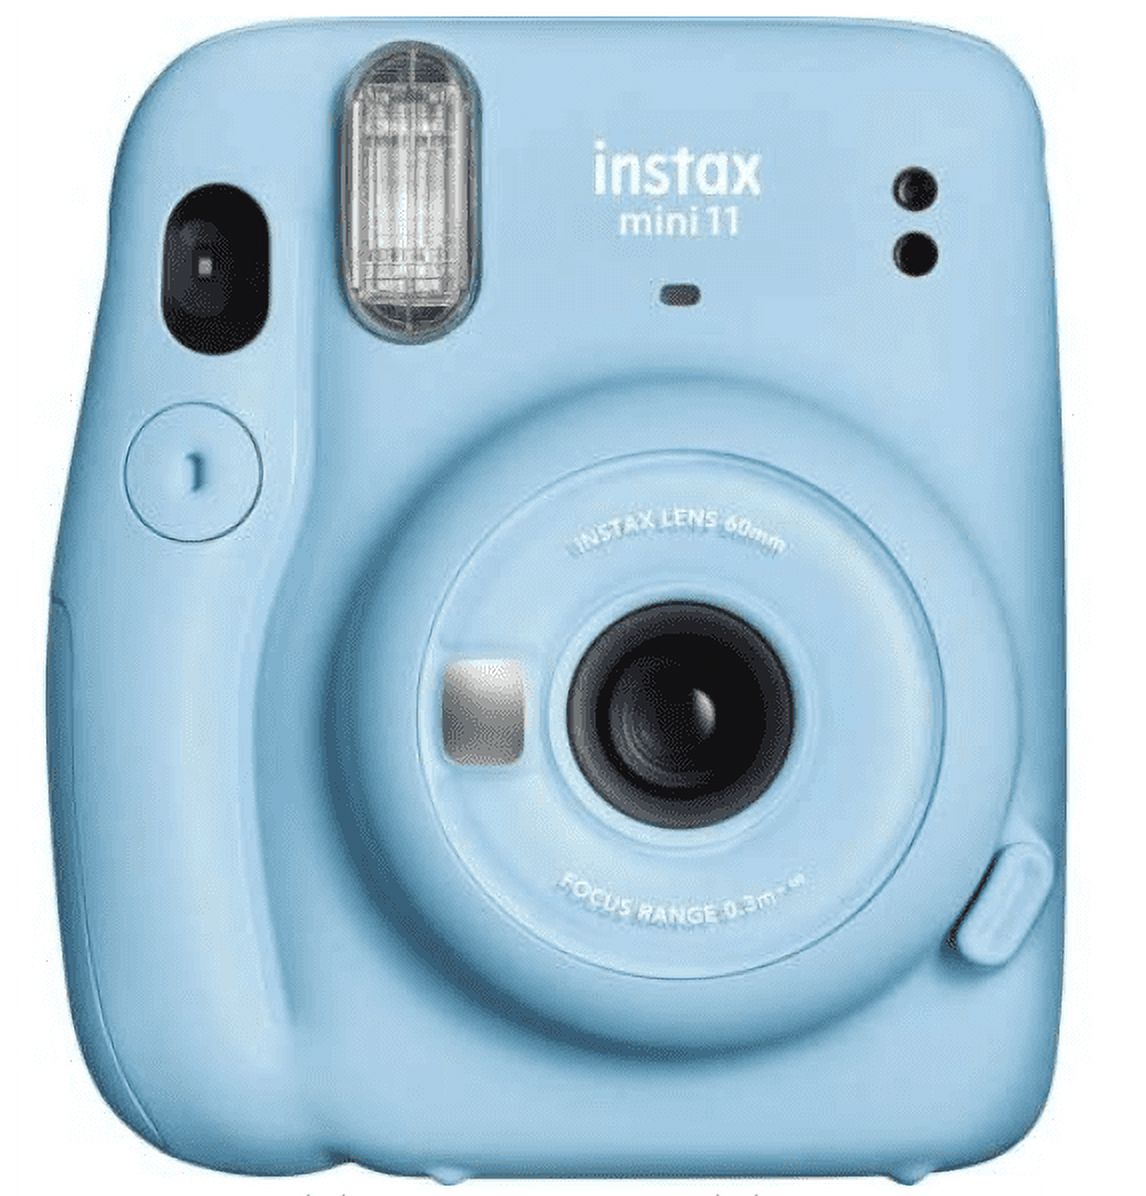 Fujifilm Instax Mini 11 Polaroid Ice Blue Instant Camera Plus Original Fuji Case, Photo Album and Fujifilm Character 10 Films (Macaron) - image 2 of 2